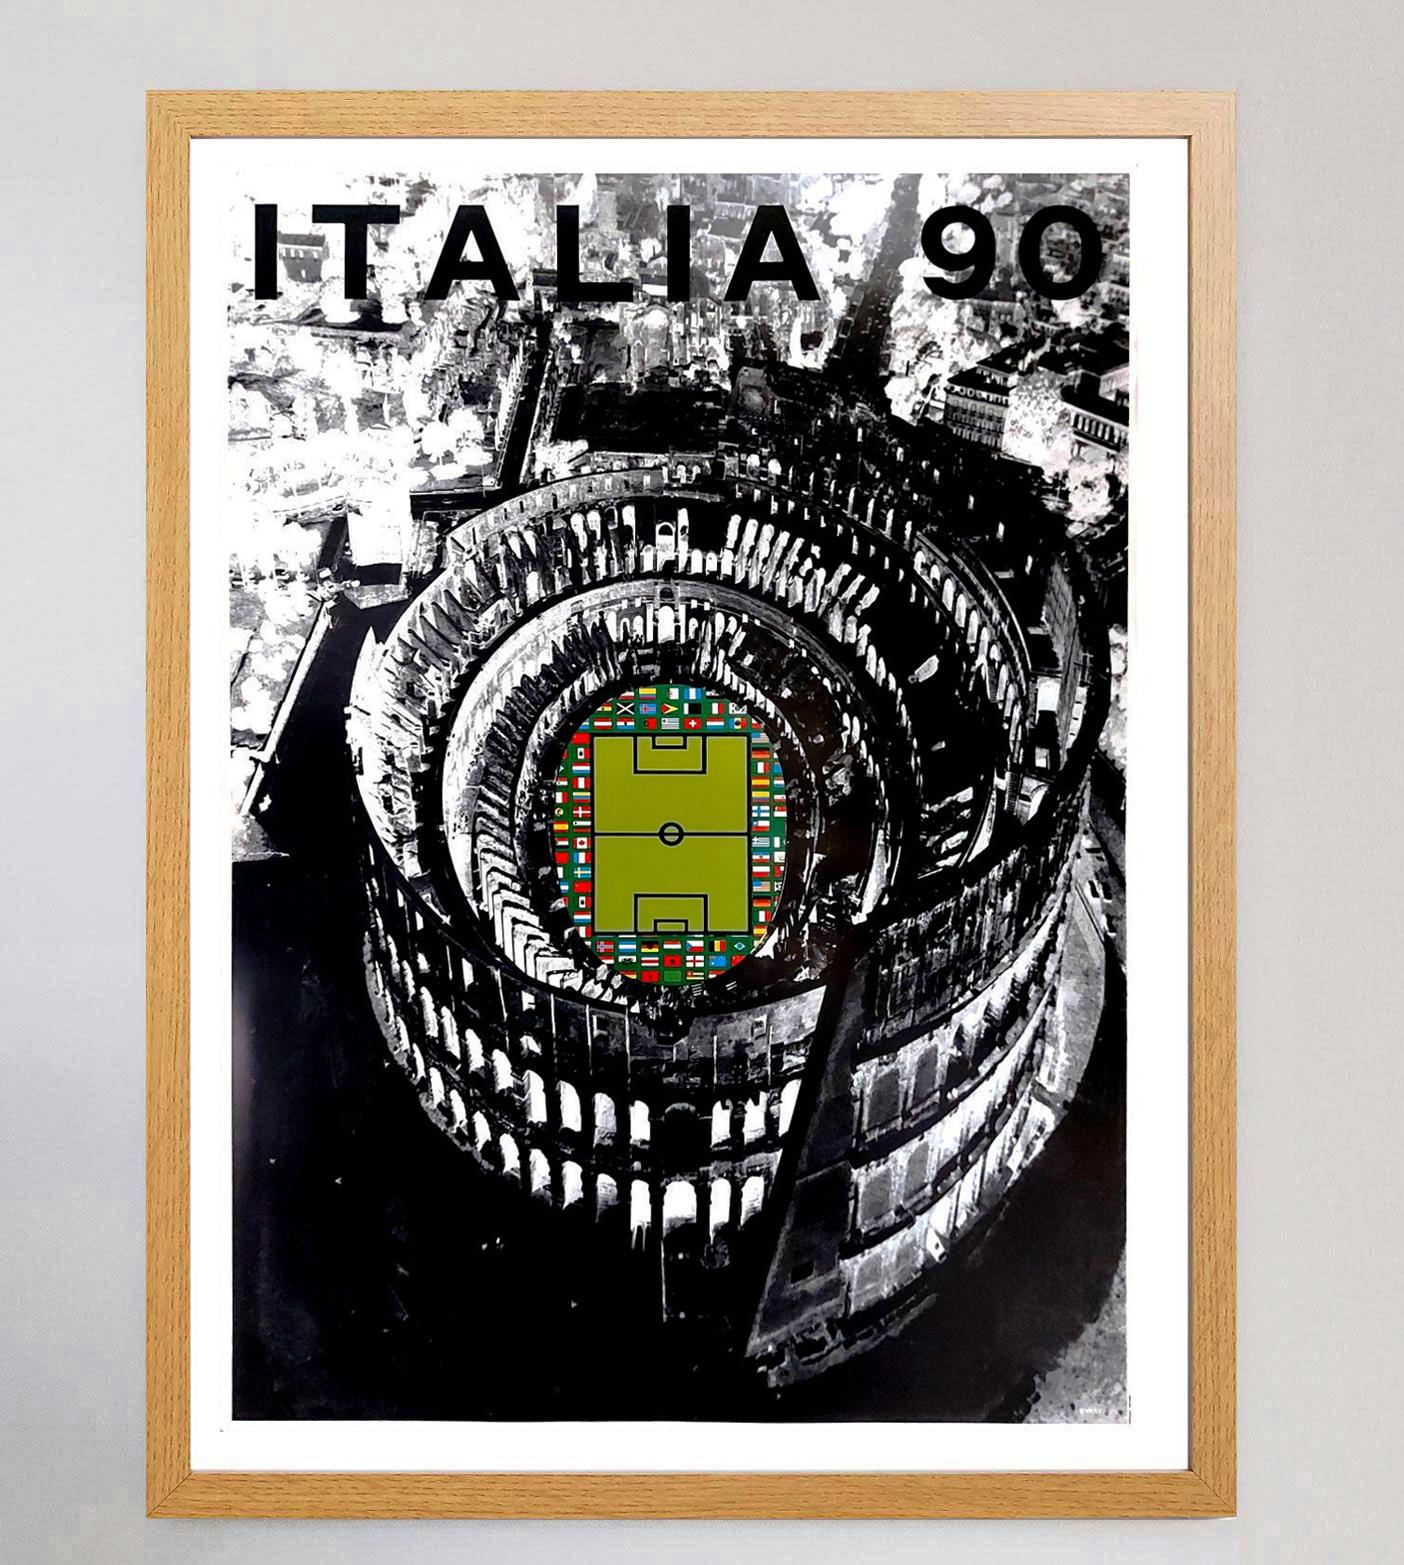 Italian 1990 World Cup Italia '90 Original Vintage Poster For Sale